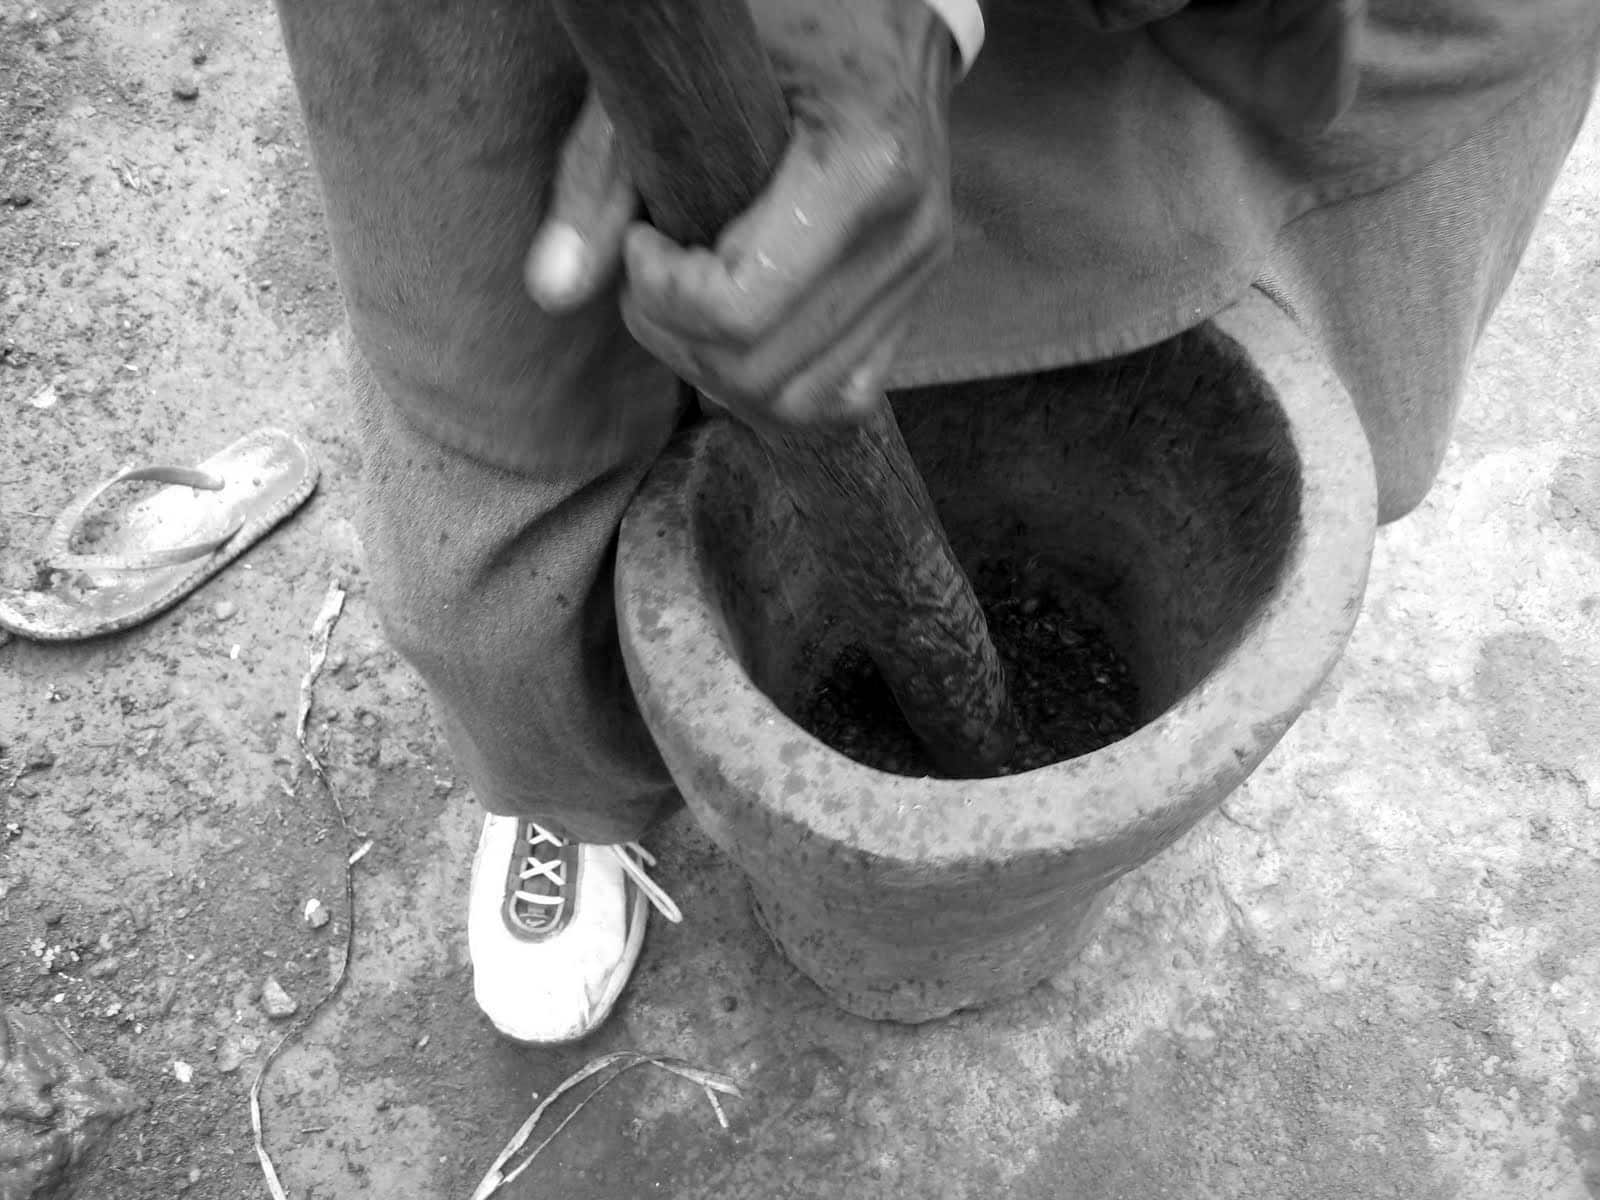 Small scale coffee farmer in Tanzania grinding coffee beans